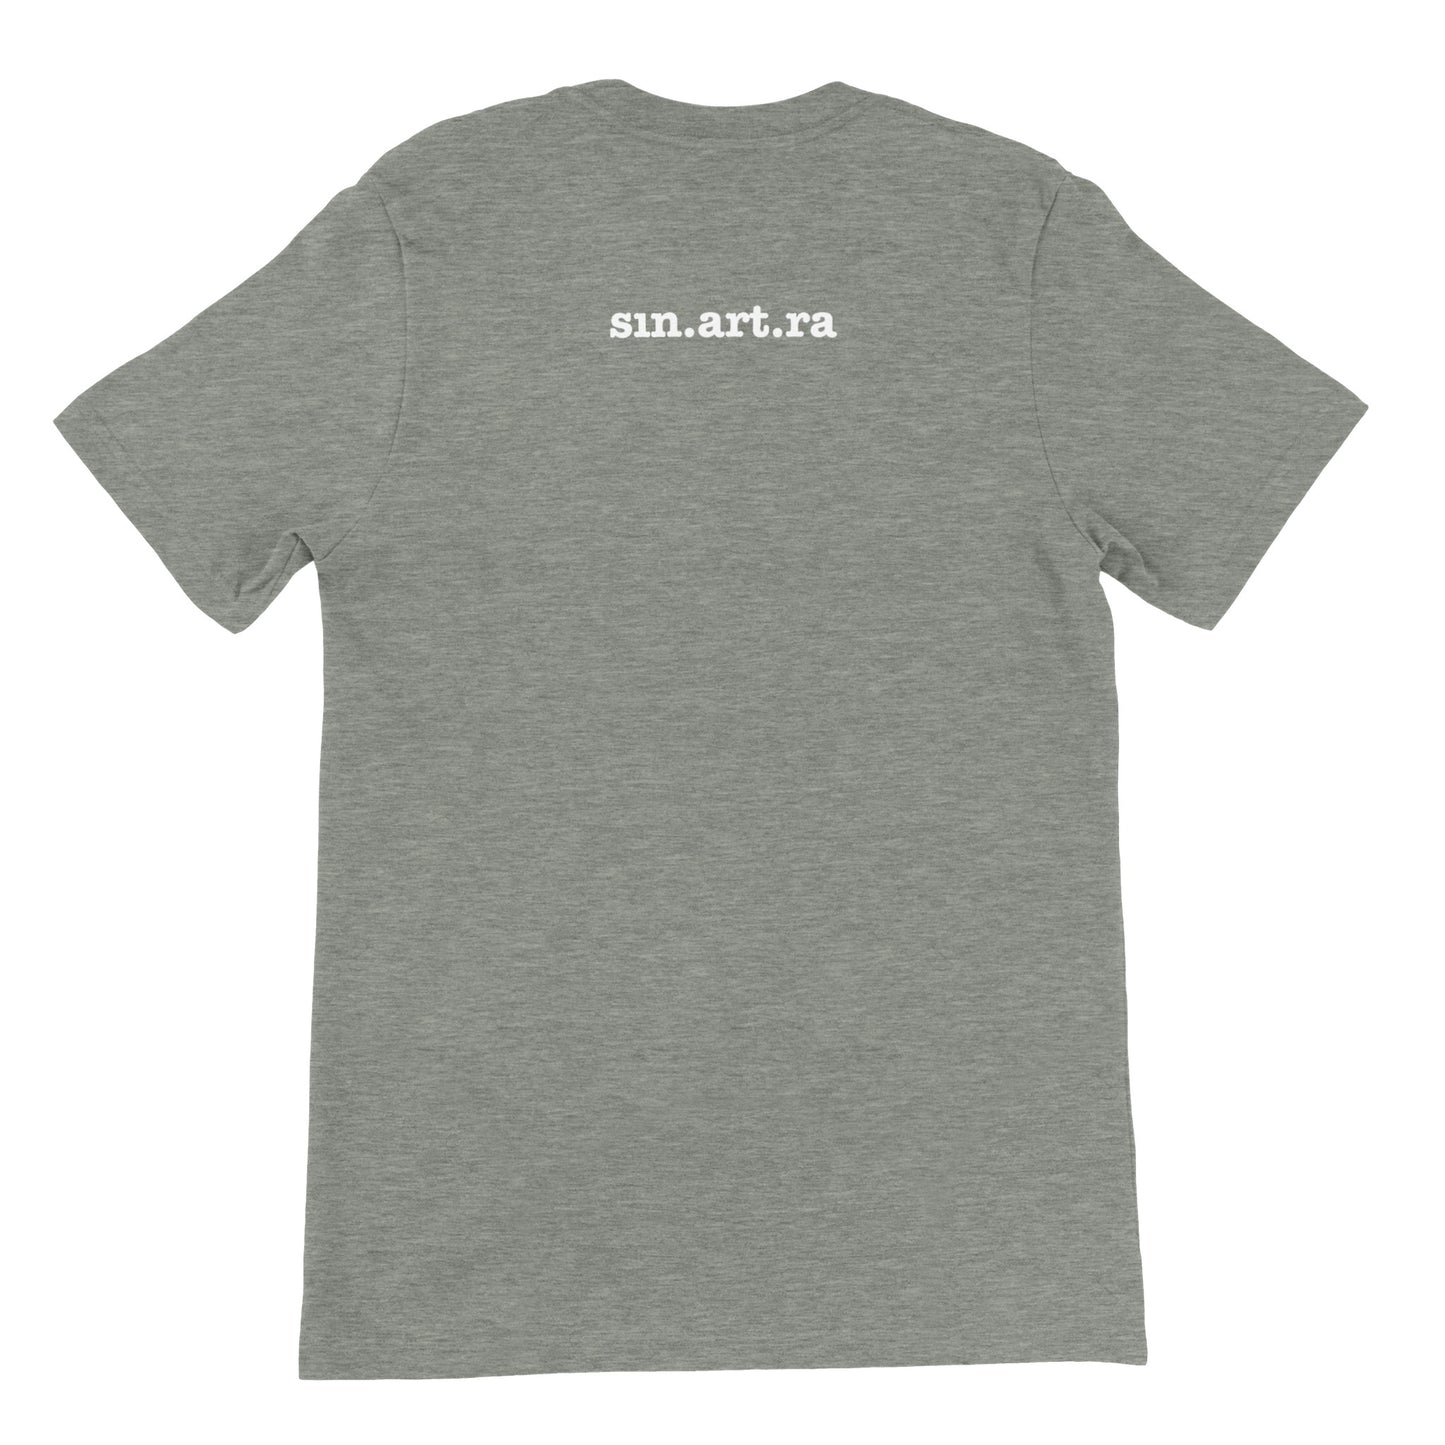 SWIRLY SINATRA "PSYCHEDELAFART" Unisex Crewneck T-shirt Pocket and Full Back Print.